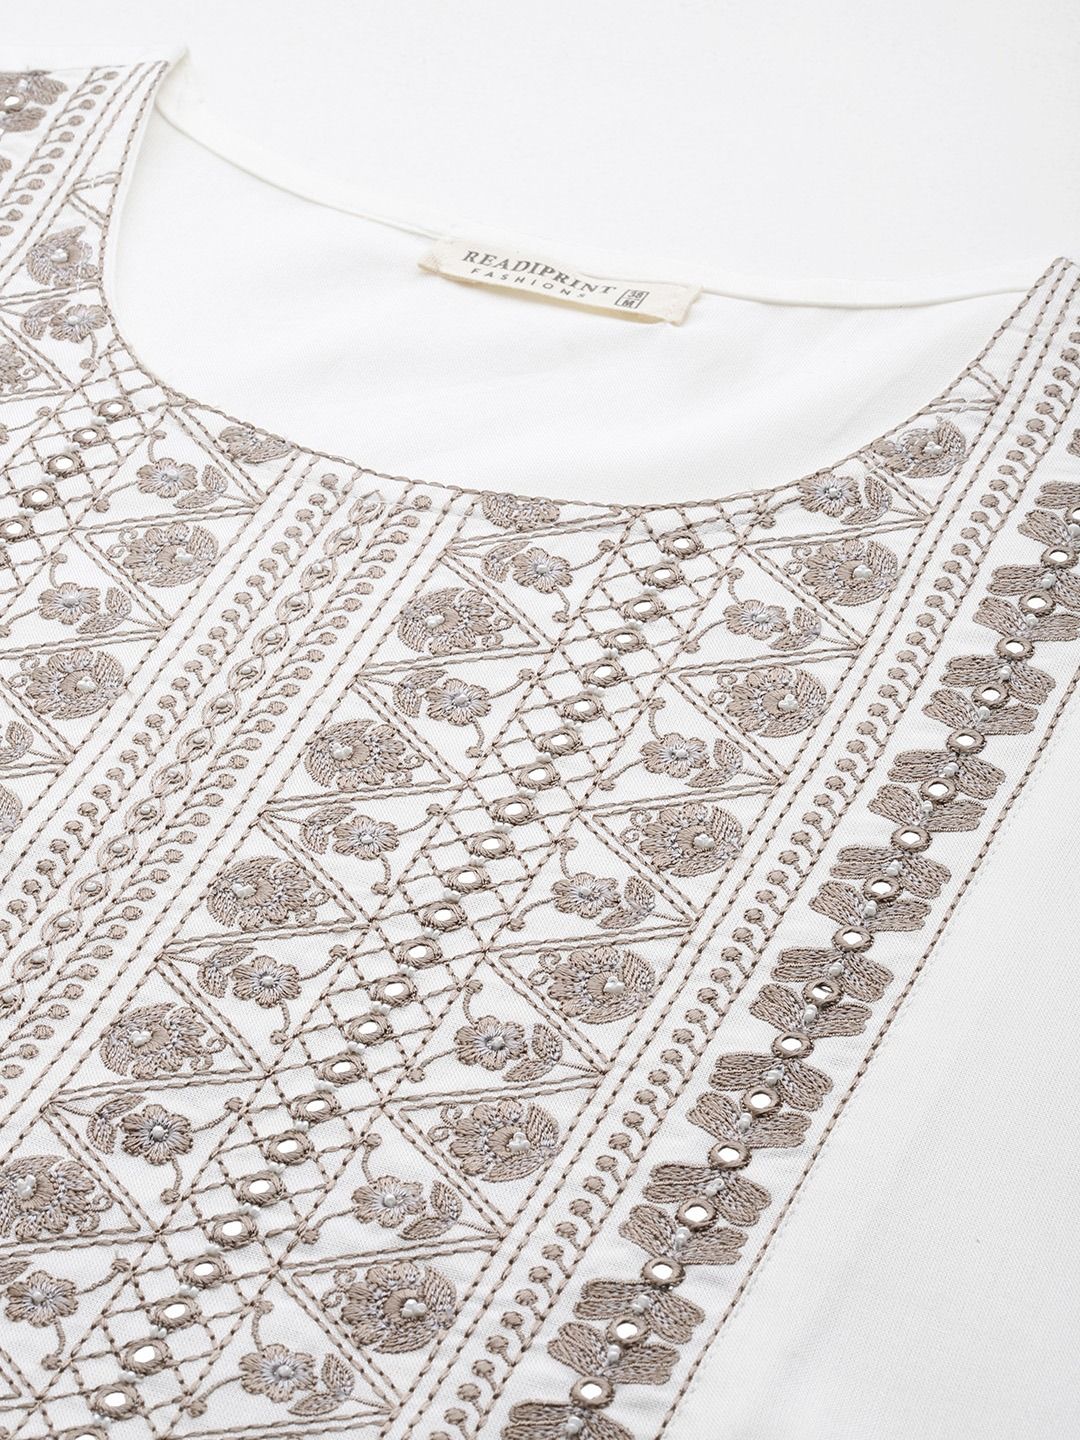 Naira Style Rayon Fabric White Color Kurti